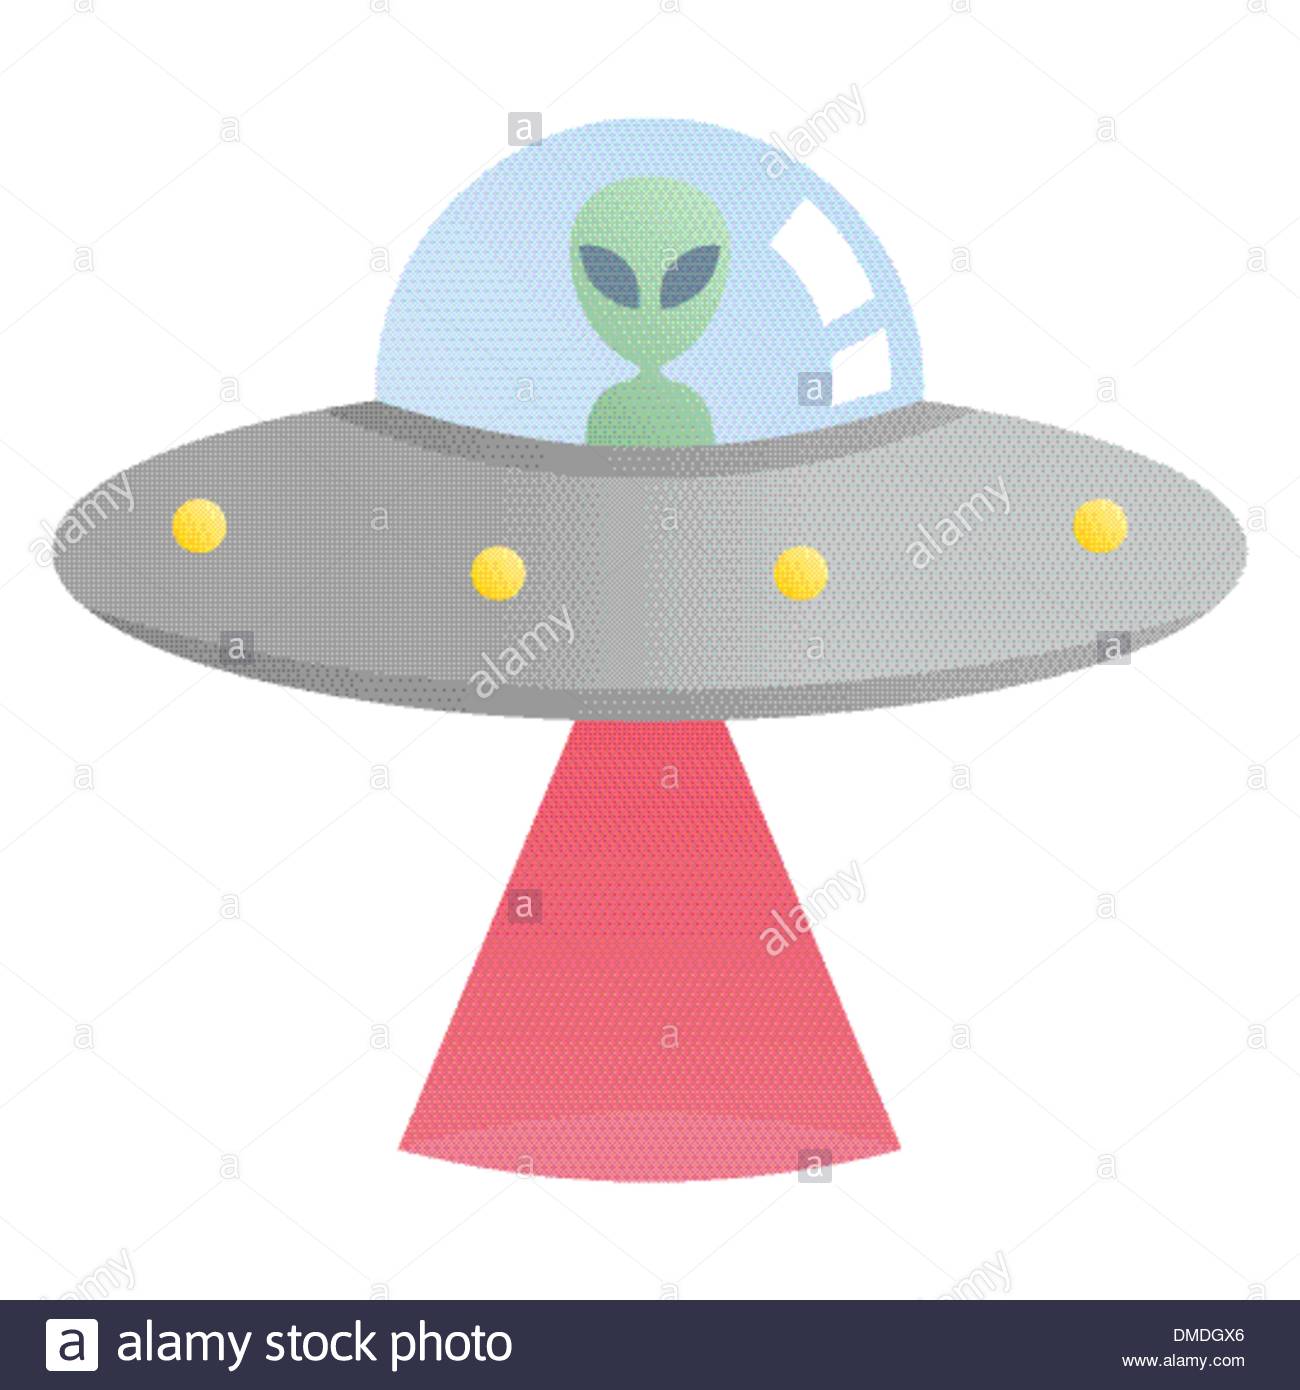 alien-in-flying-ufo-with-red-laser-beam-DMDGX6.jpg